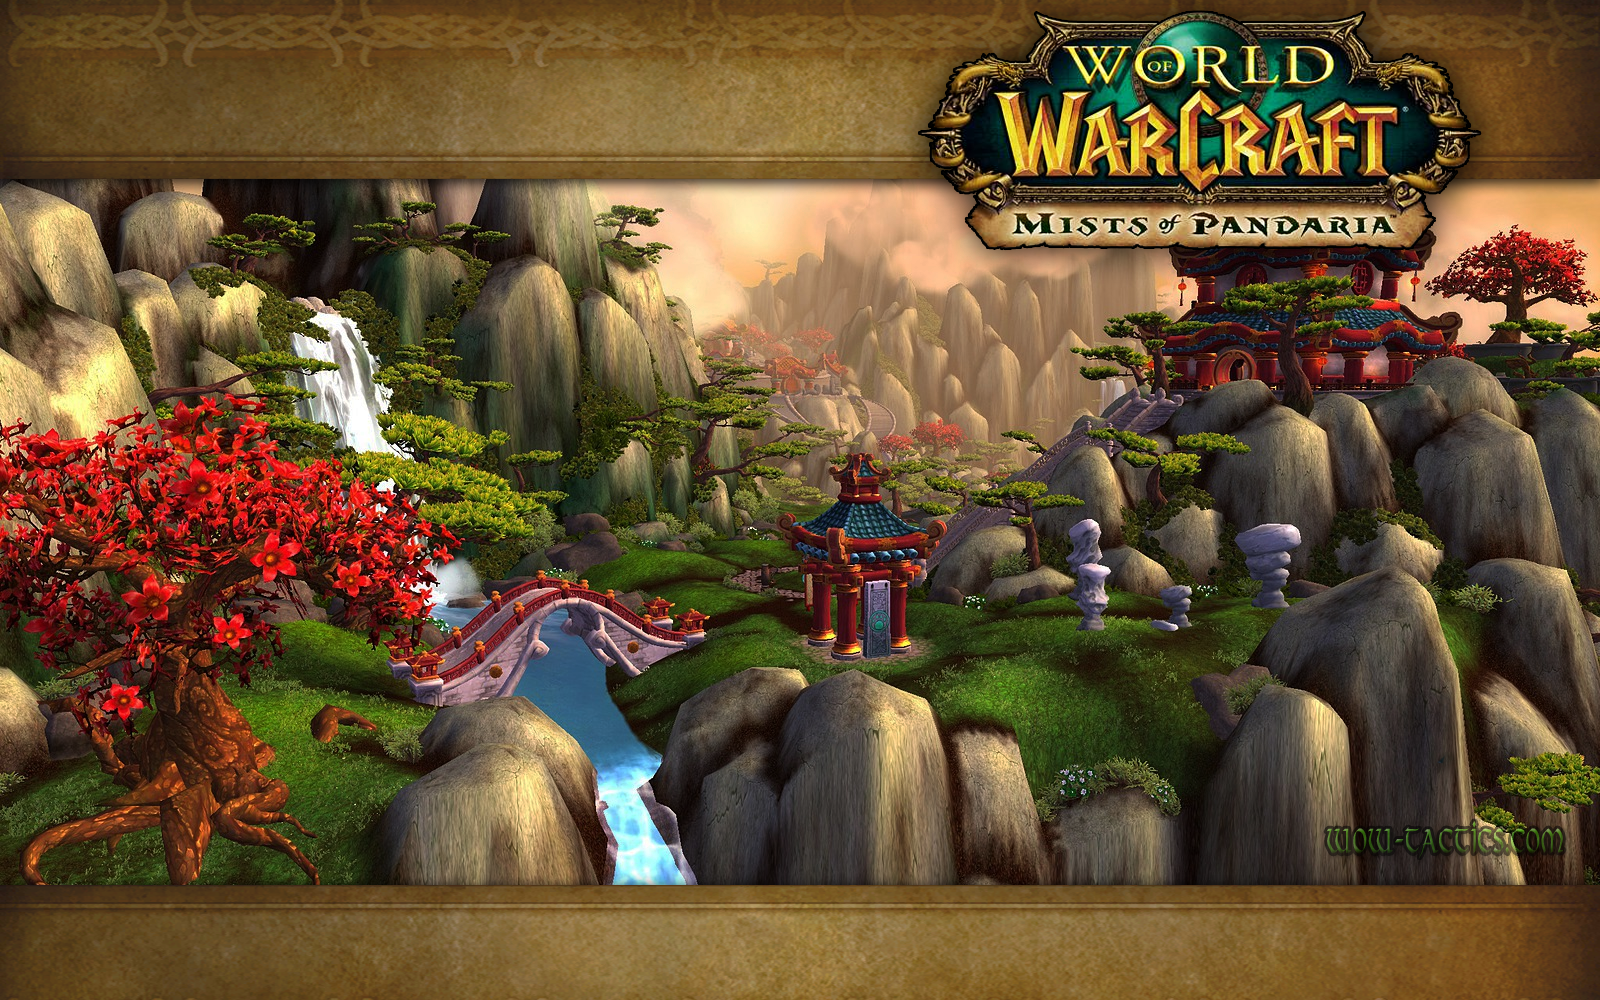 High Resolution Wallpaper | World Of Warcraft: Mists Of Pandaria 1600x1000 px